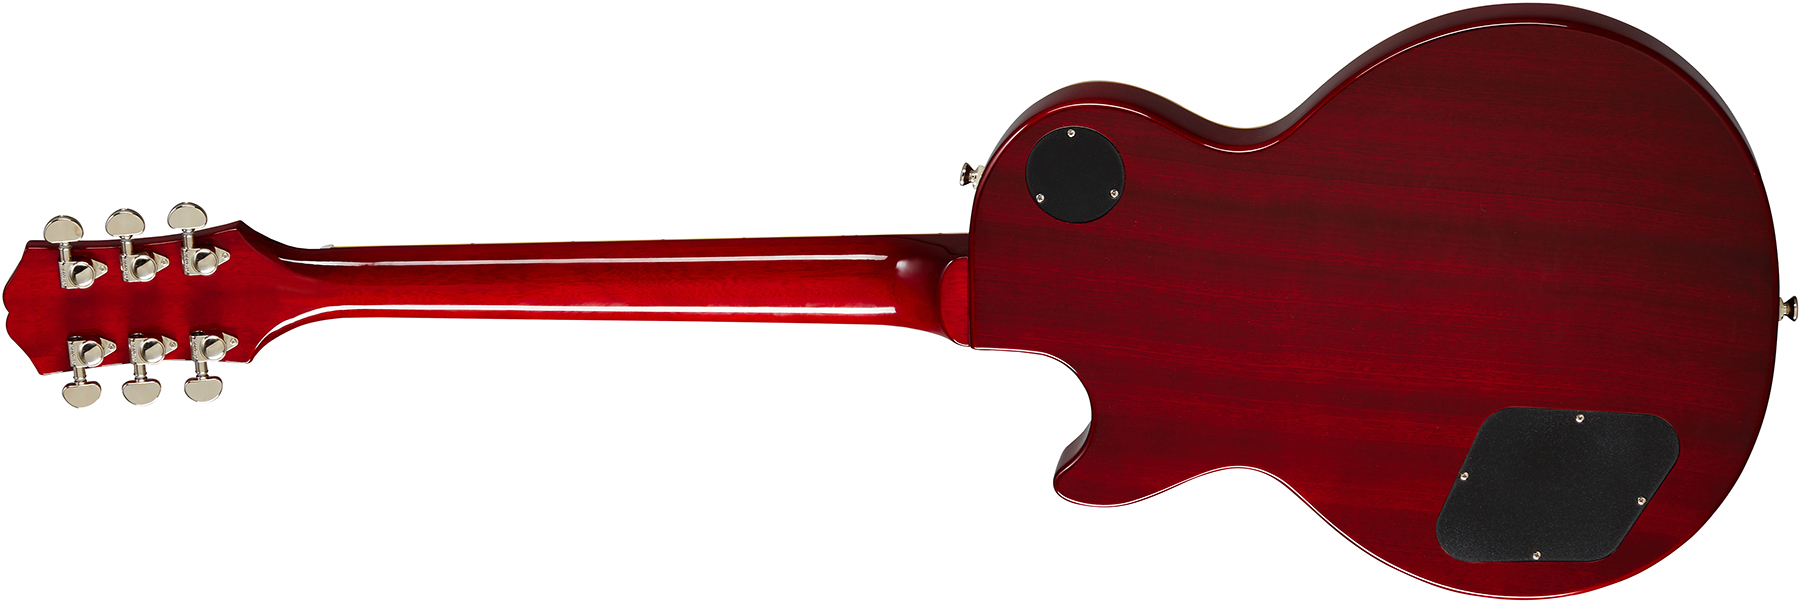 Epiphone Les Paul Standard 60s 2h Ht Rw - Iced Tea - Enkel gesneden elektrische gitaar - Variation 1